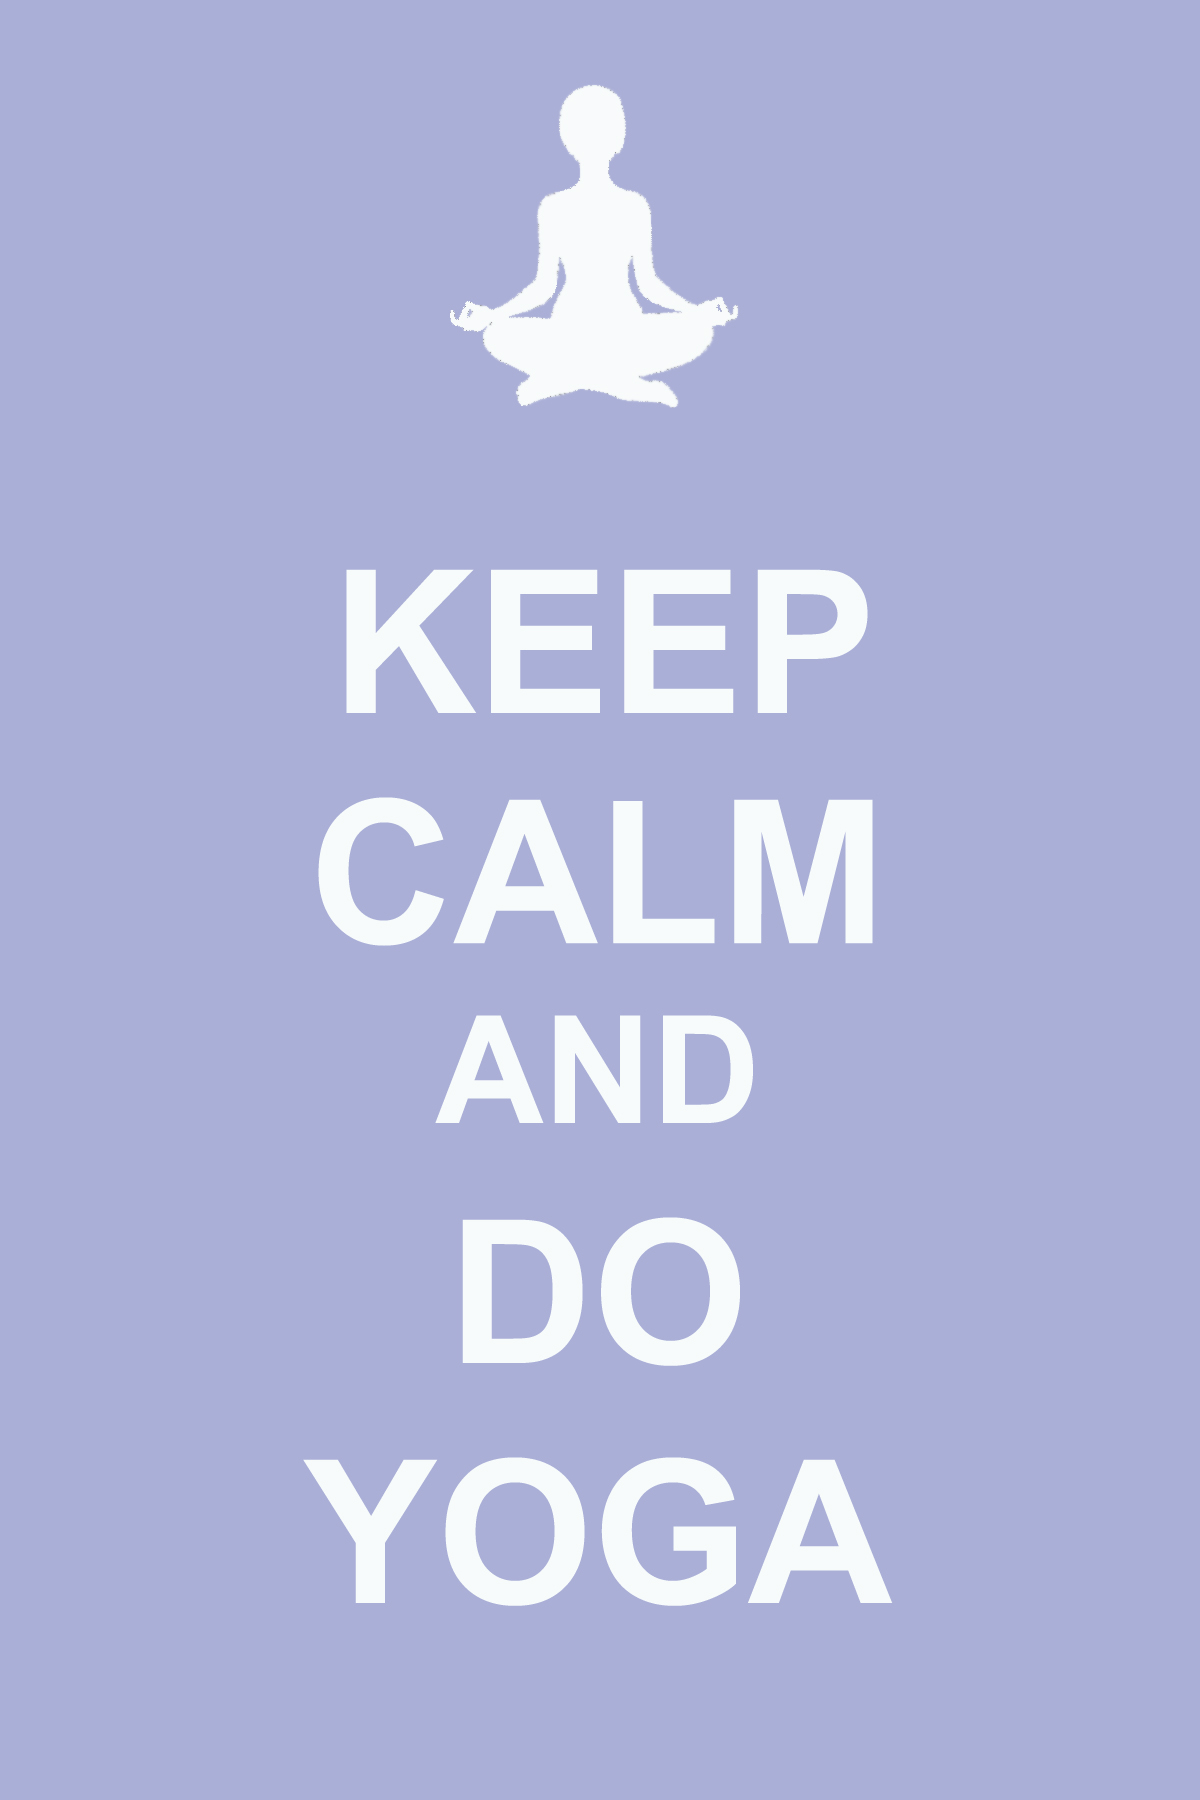 byDaccas. Keep calm and do yoga